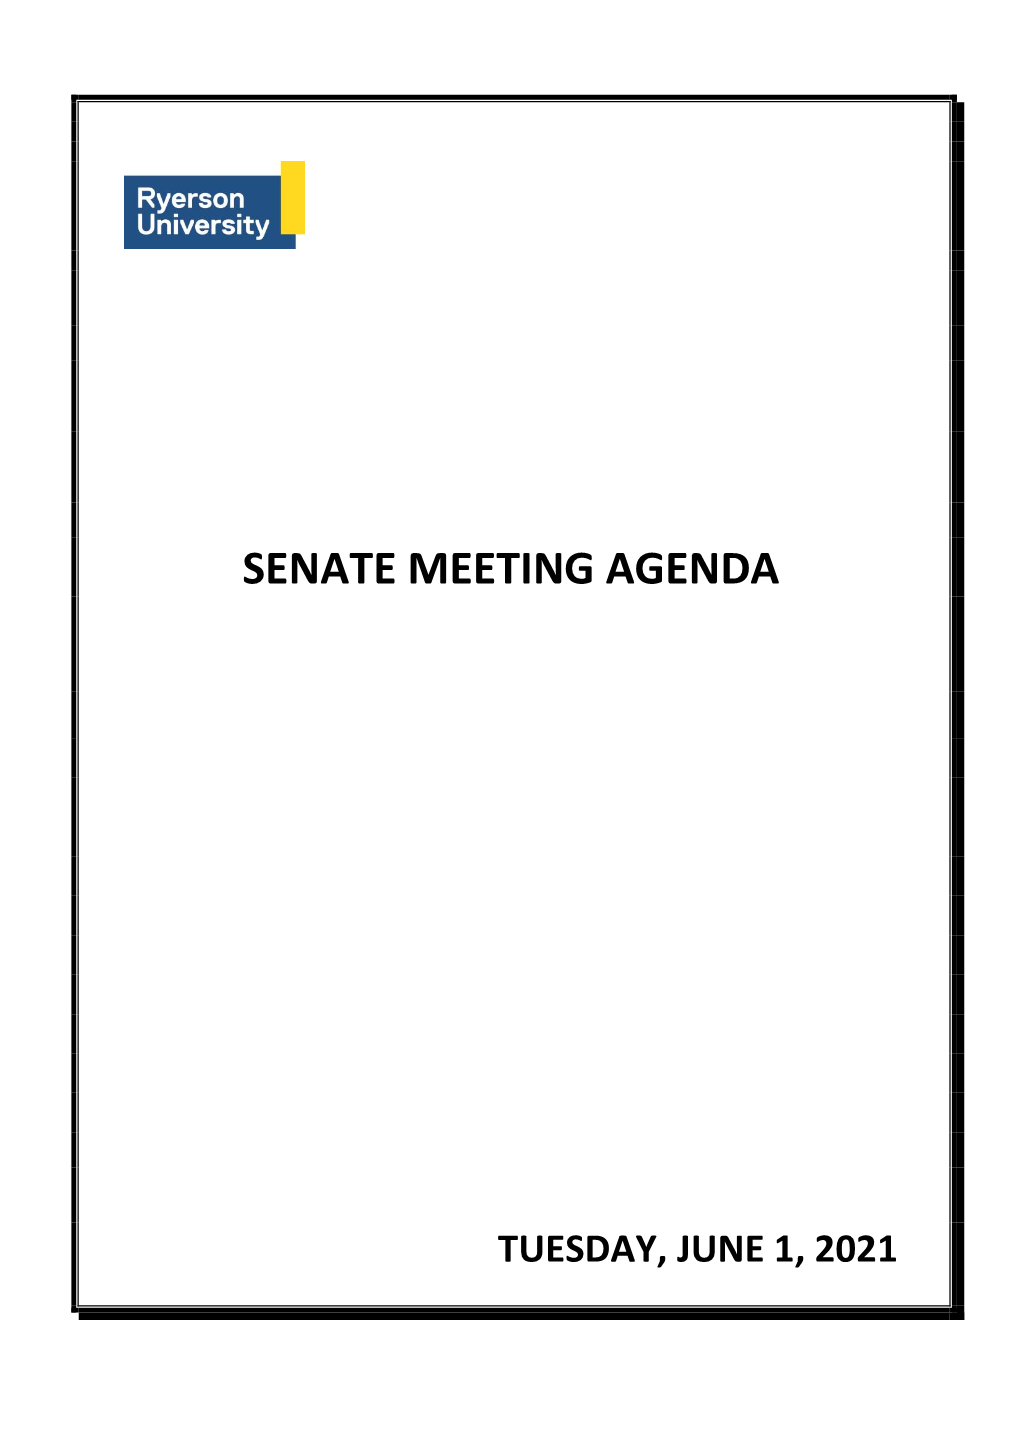 Tuesday, June 1, 2021 Senate Meeting Agenda